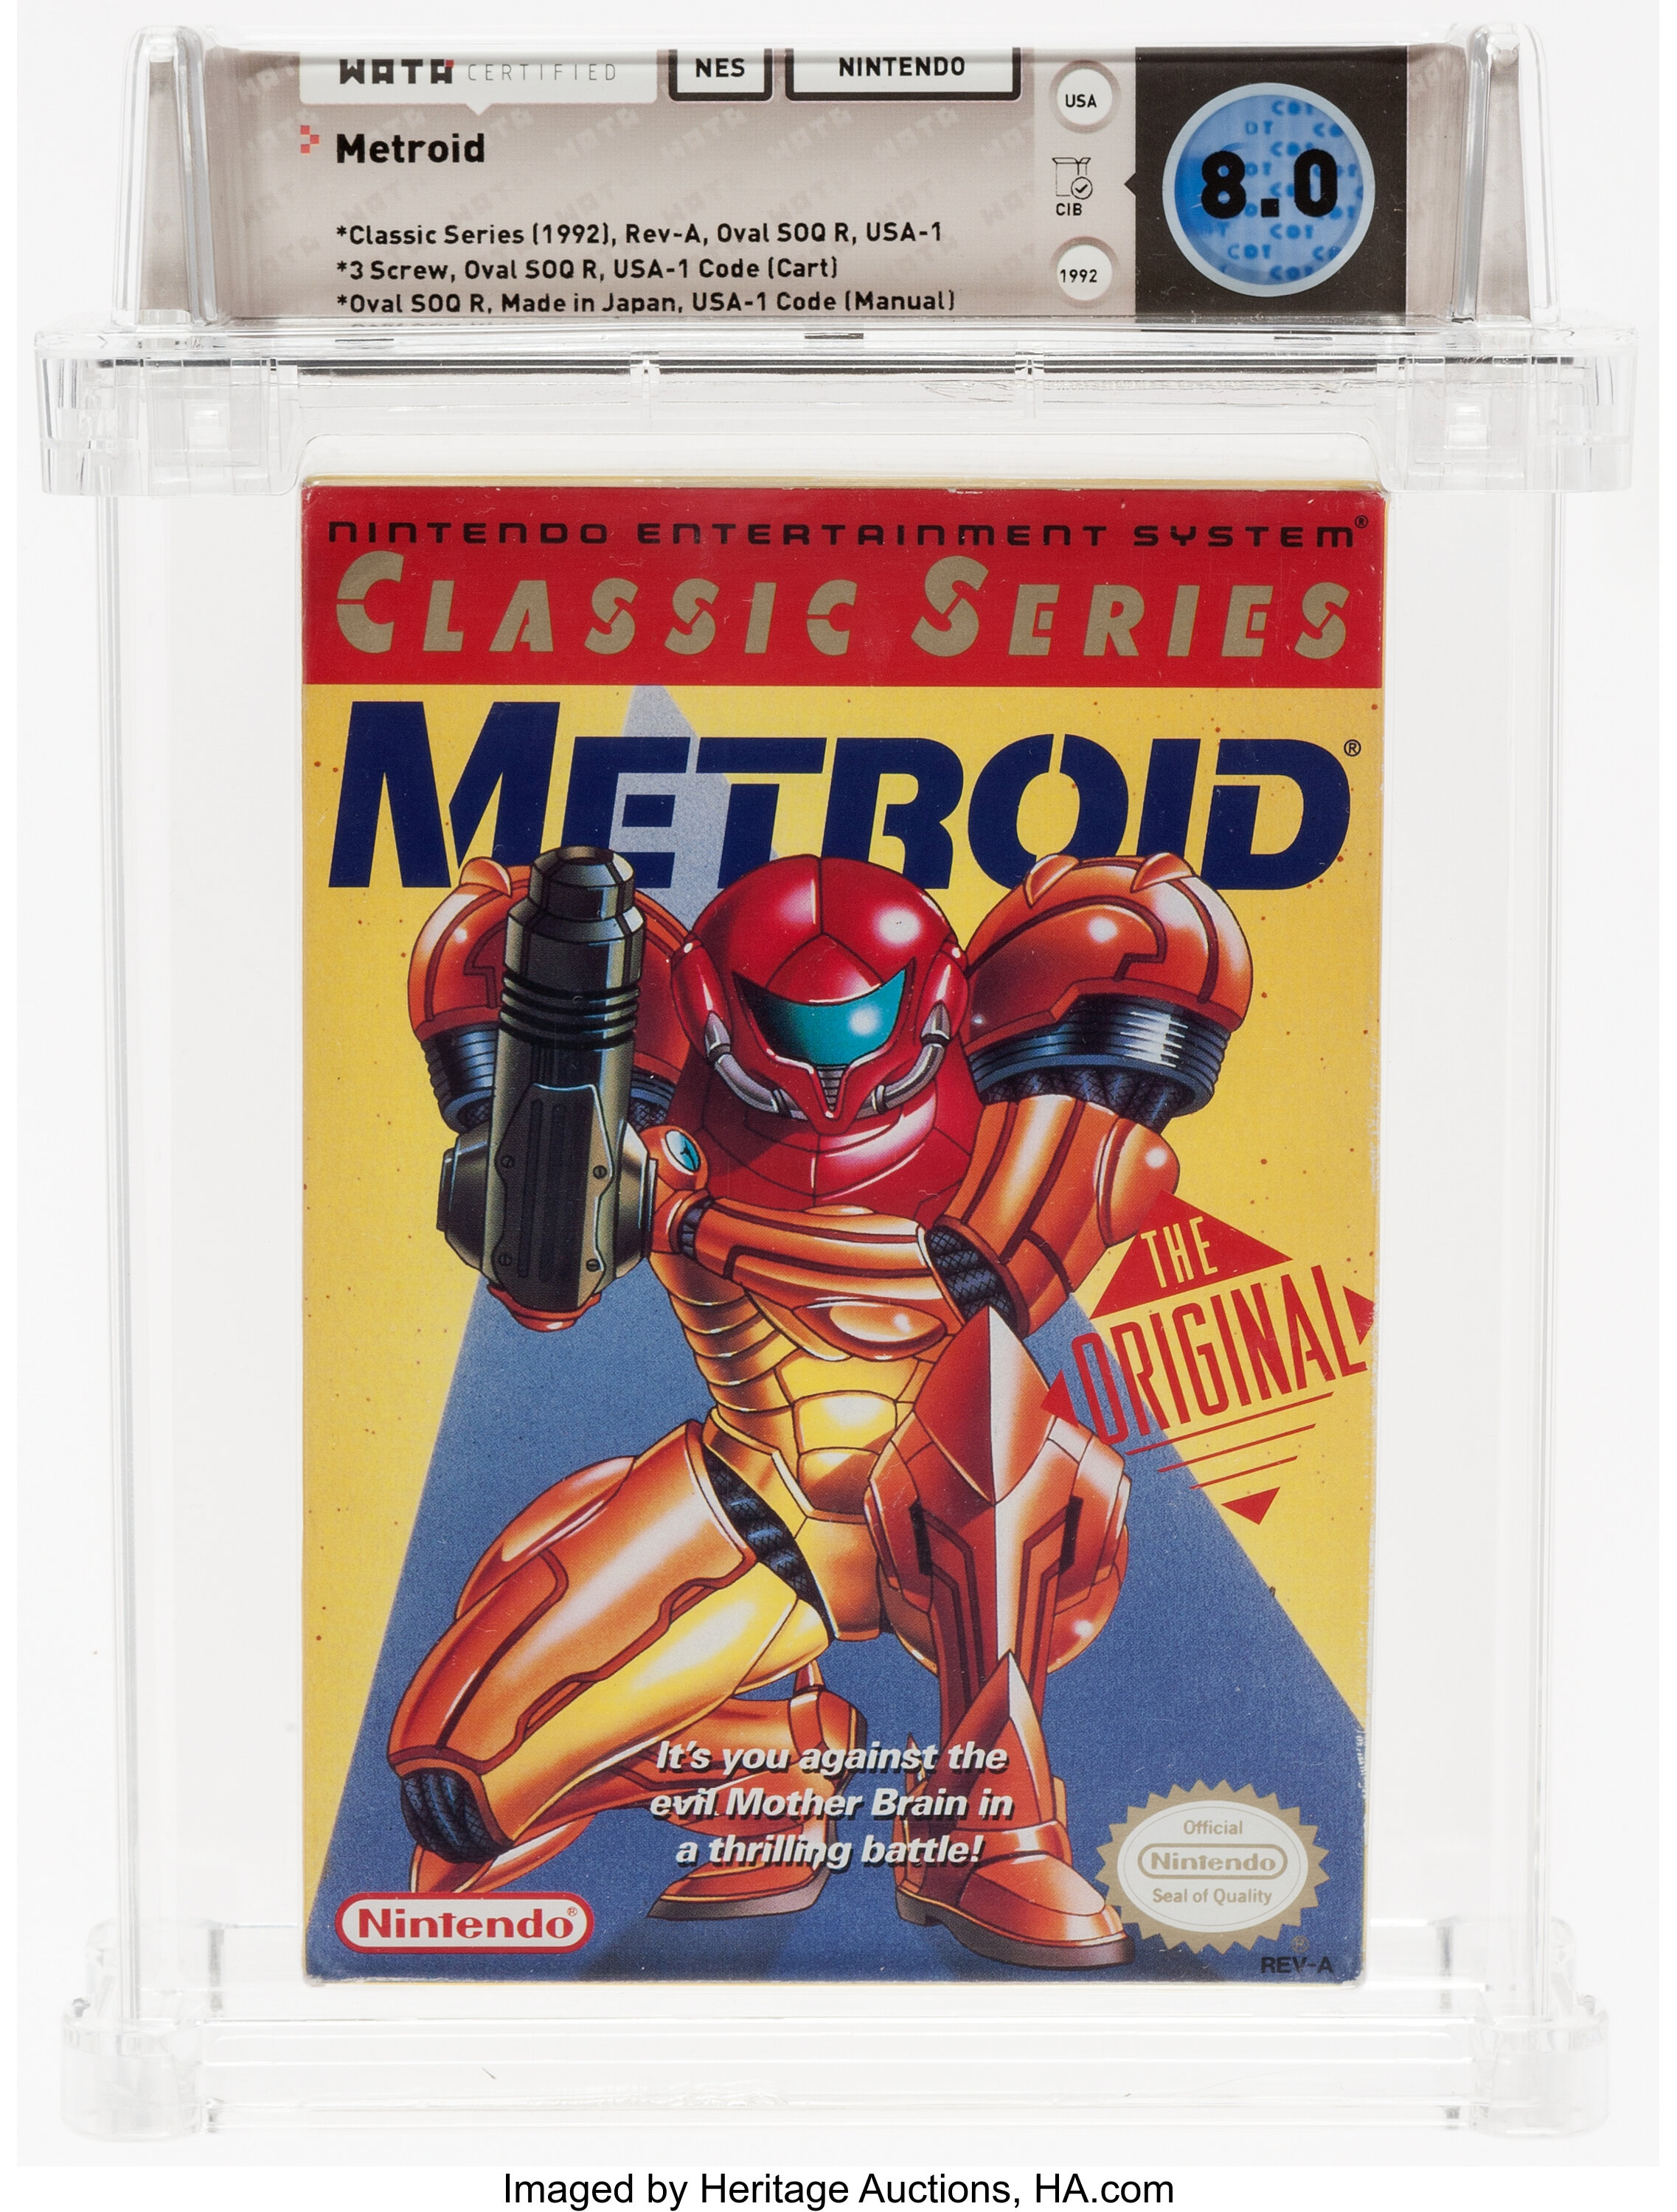 Metroid Nes Nintendo 1992 Wata 8 0 Cib Complete In Box Lot 12218 Heritage Auctions